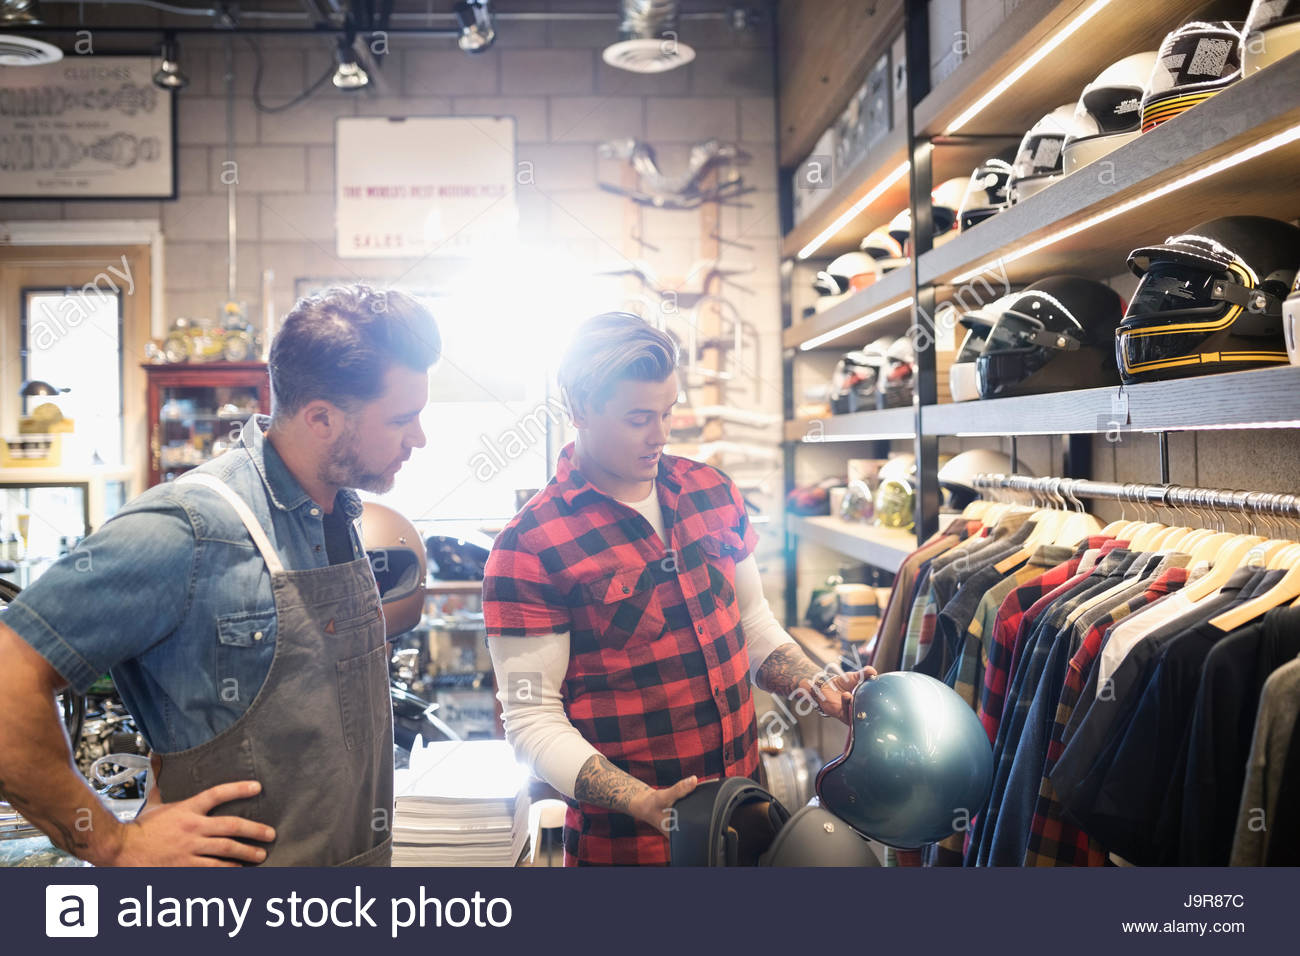 Motorcycle shop owner helping customer browsing helmets Stock Photo